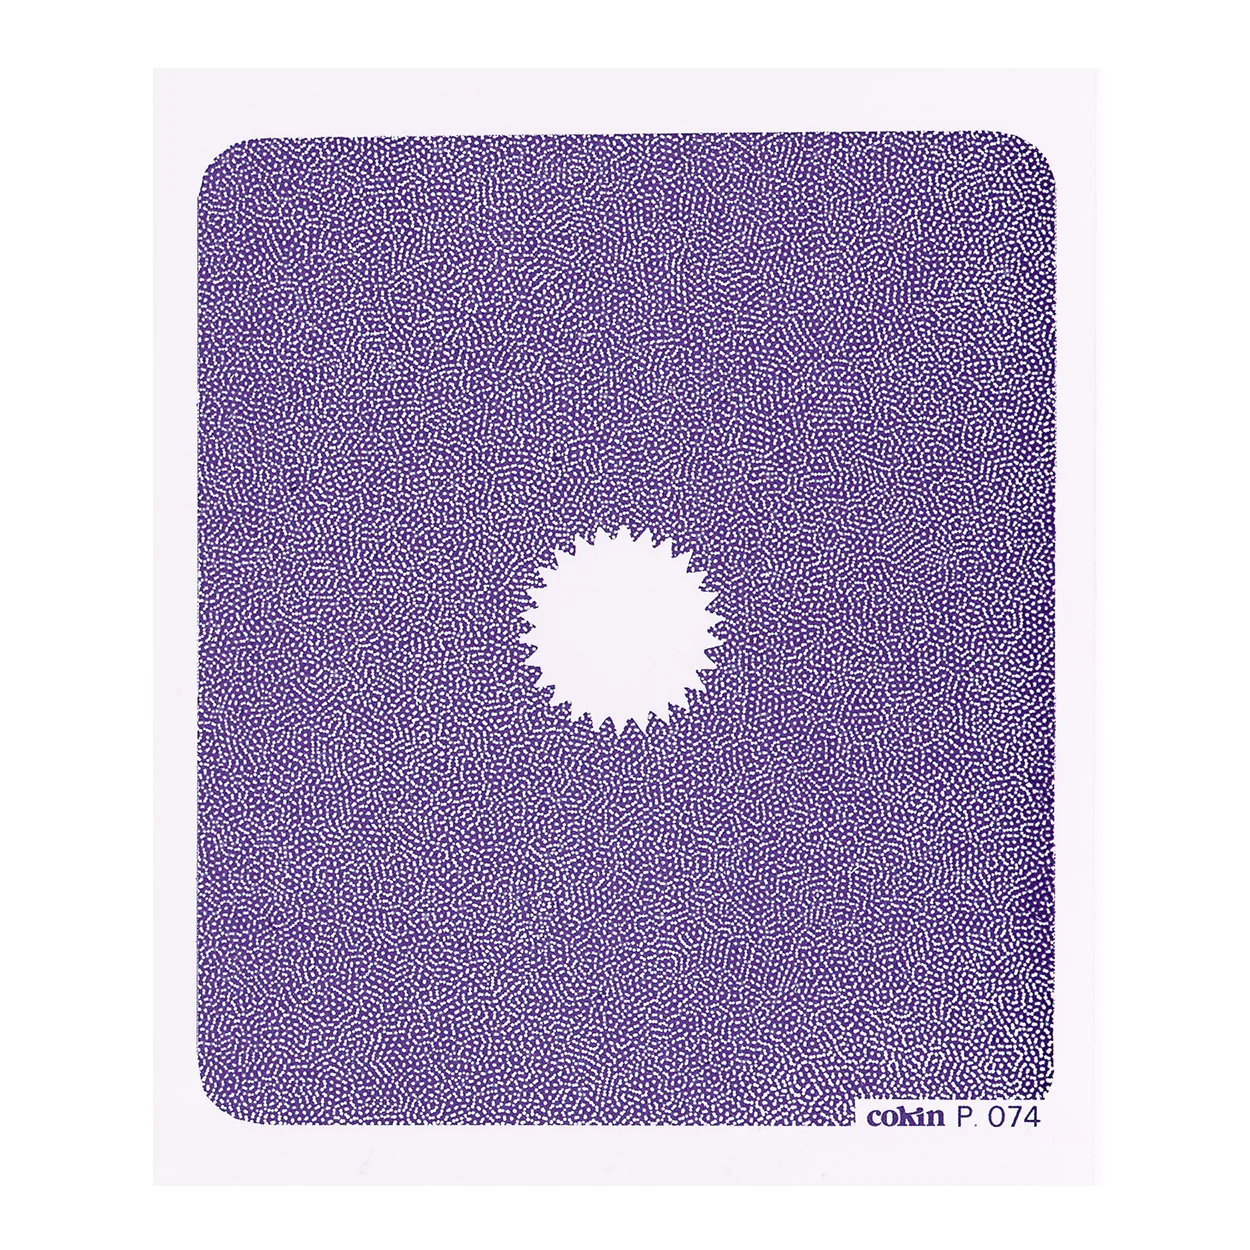 Cokin Violet Diffuser Center Spot Filter #074